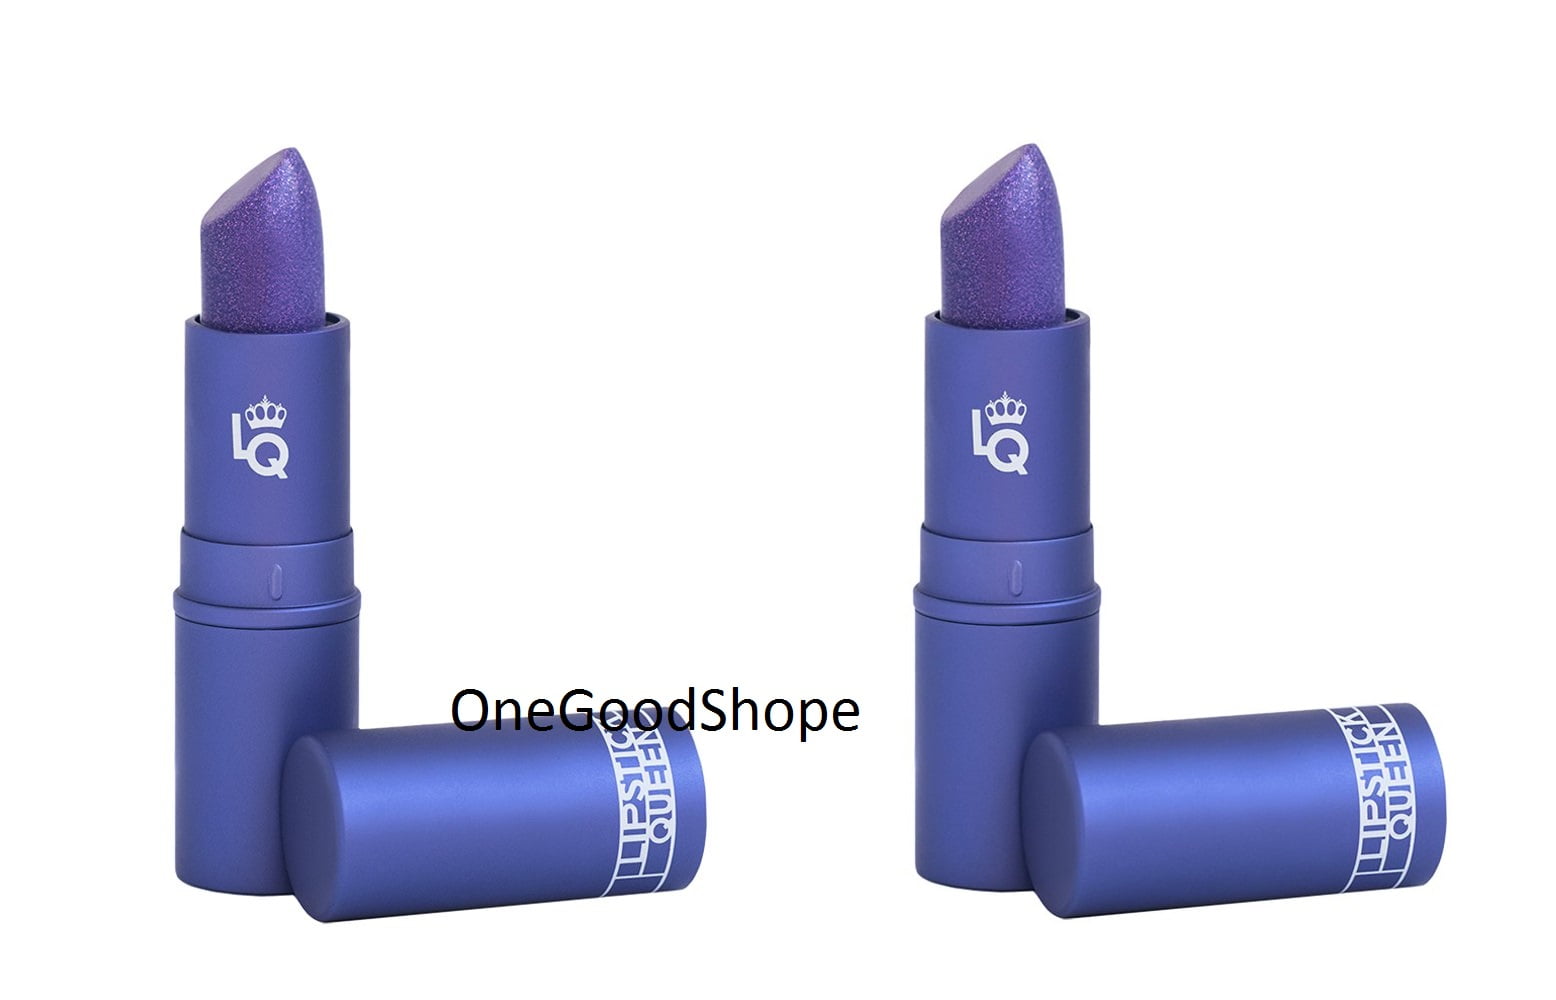 Elegant Design Eelskin Soft Leather Lipstick case E 565 